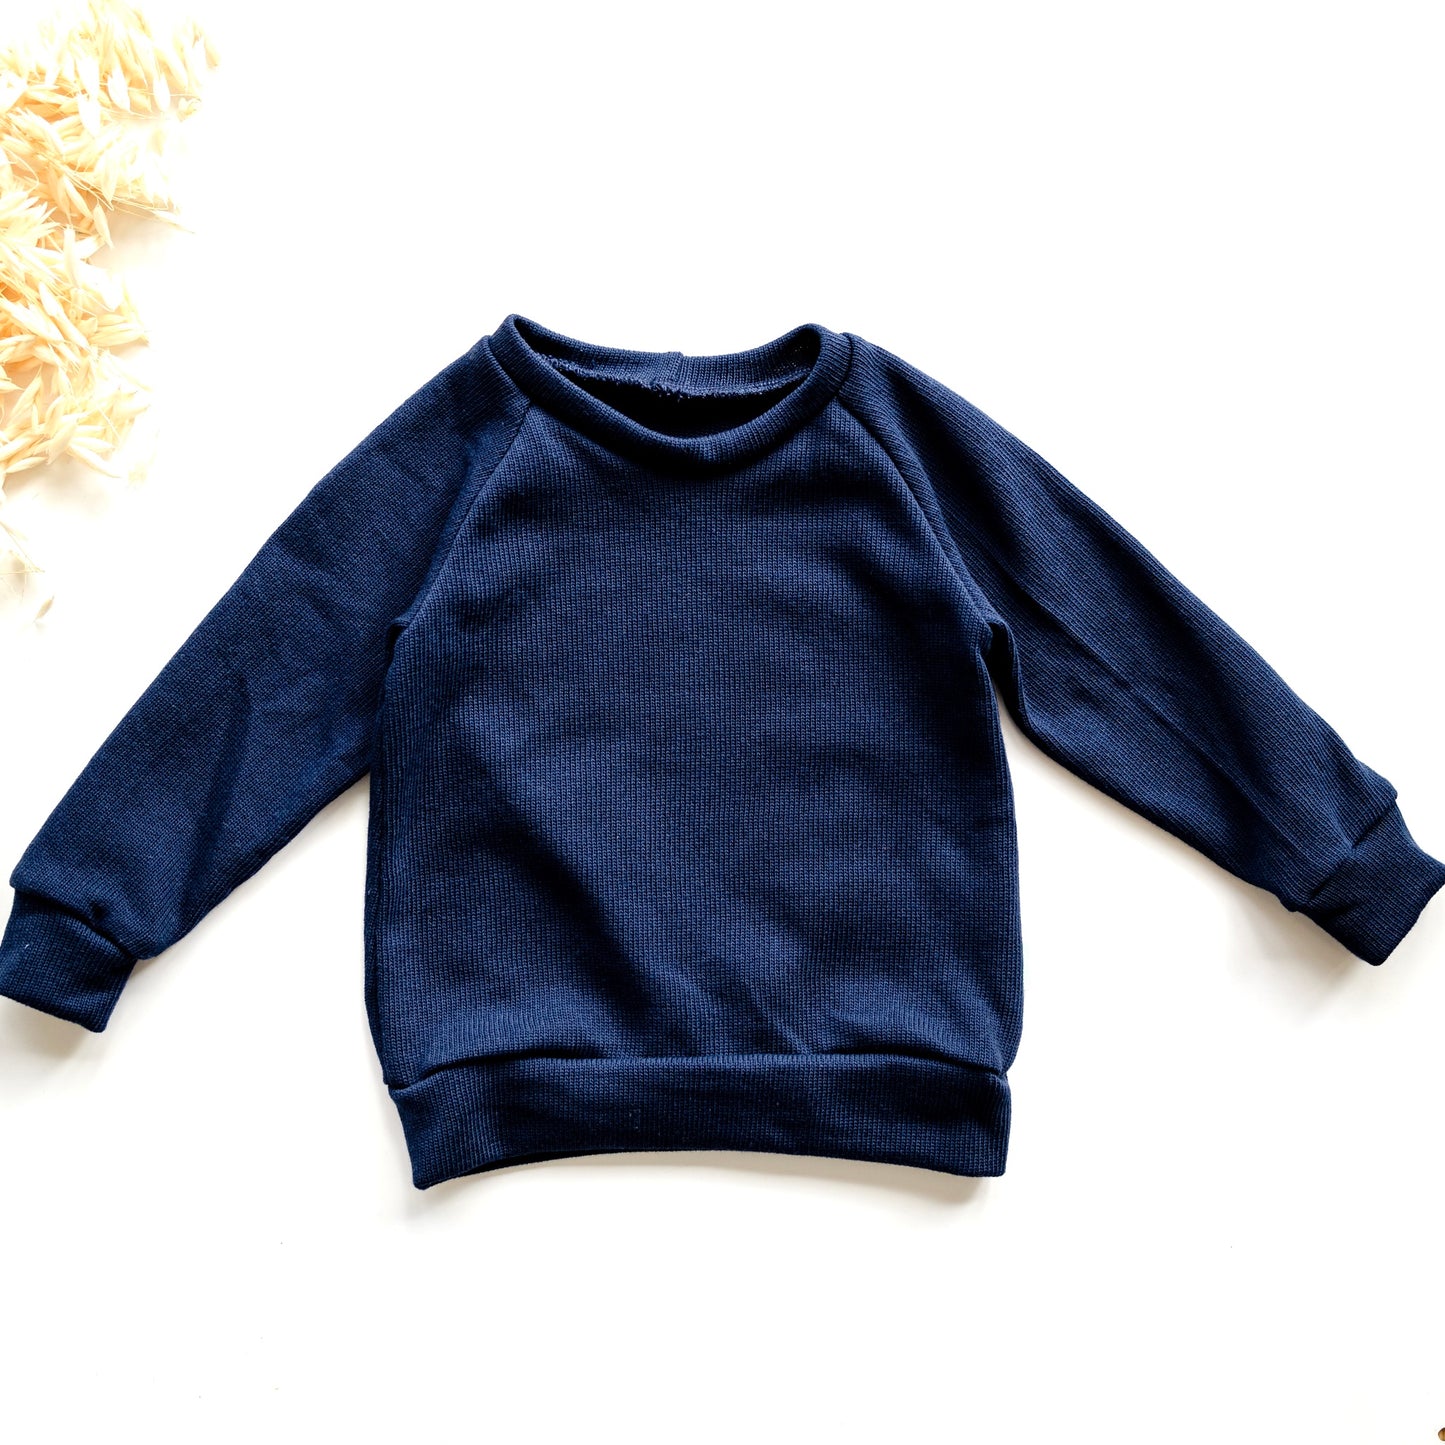 Knit sweater, dark blue